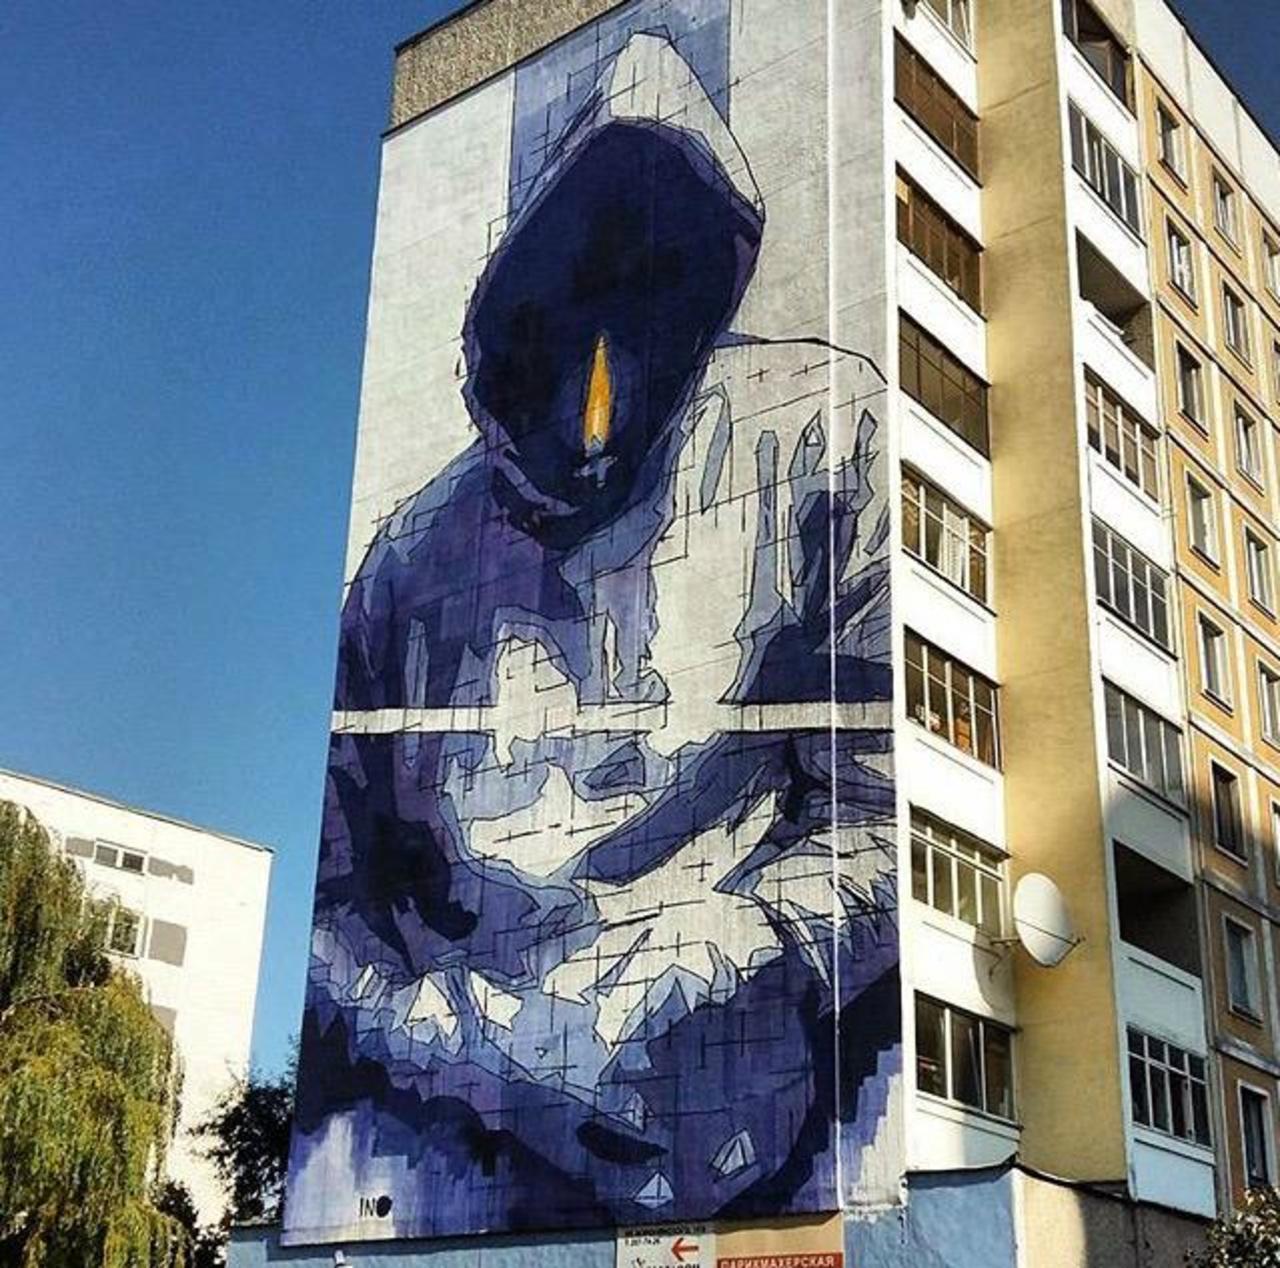 'Man With No Name' 
New Street Art by iNO in Minsk, Belarus 

#art #graffiti #mural #streetart http://t.co/VVAuQzVKFM